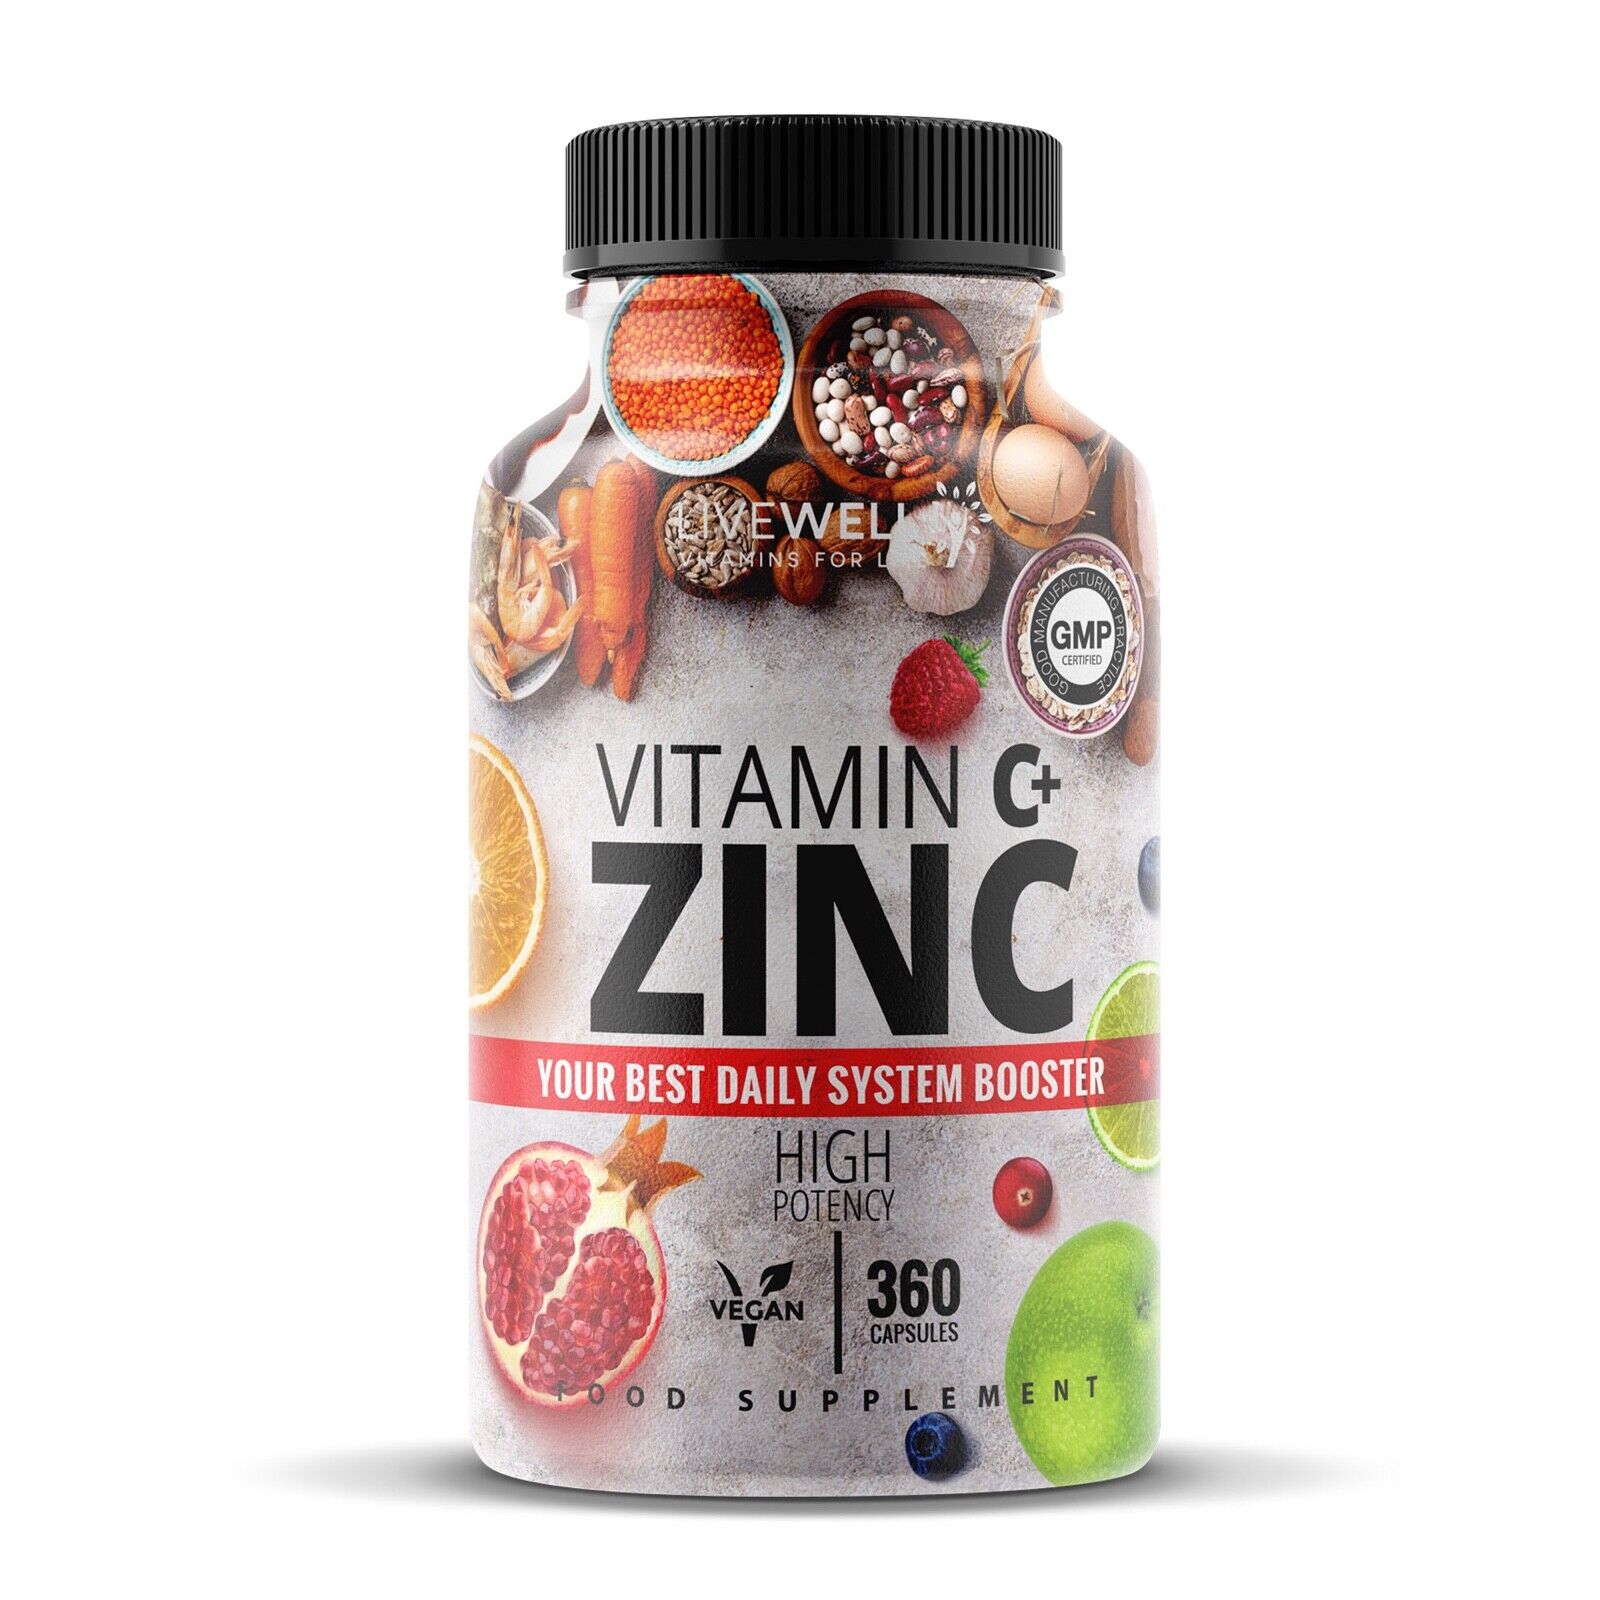 Vitamin C 1200mg + Zinc 40mg Capsules / Tablets - Immune Support – Vegan UK 